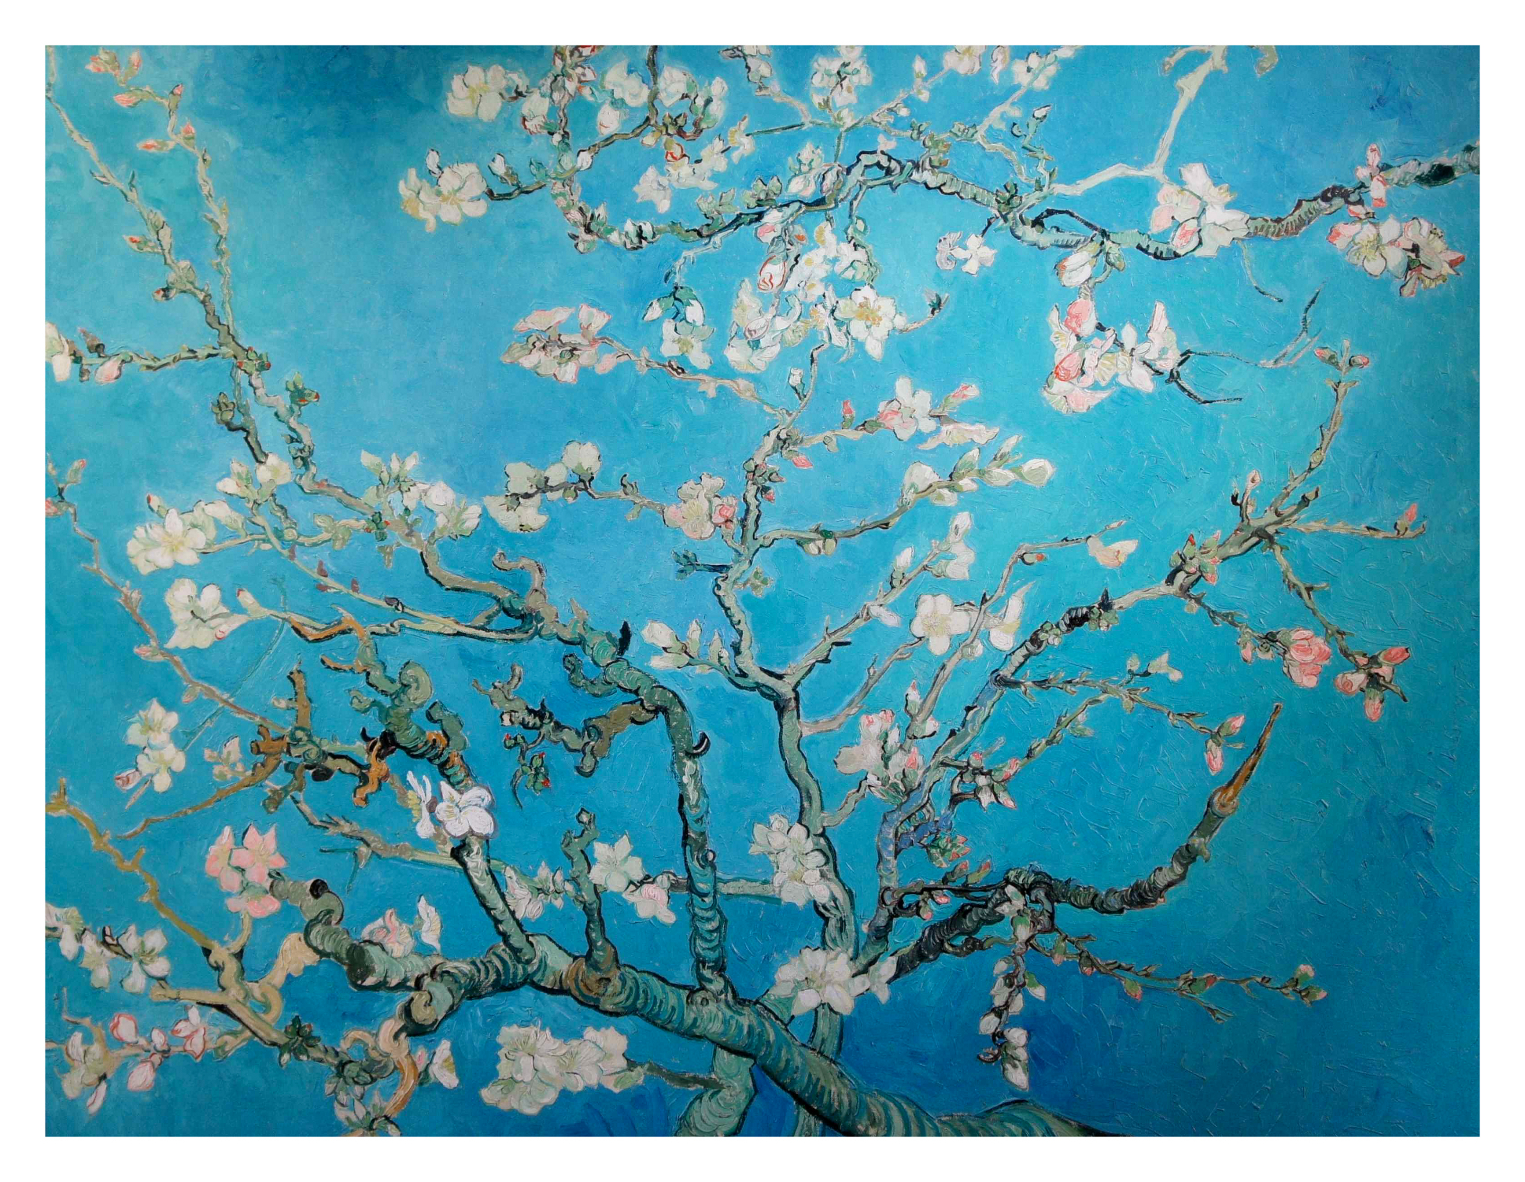 Vincent van Gogh - Amandelbloesem (Almond Blossom)